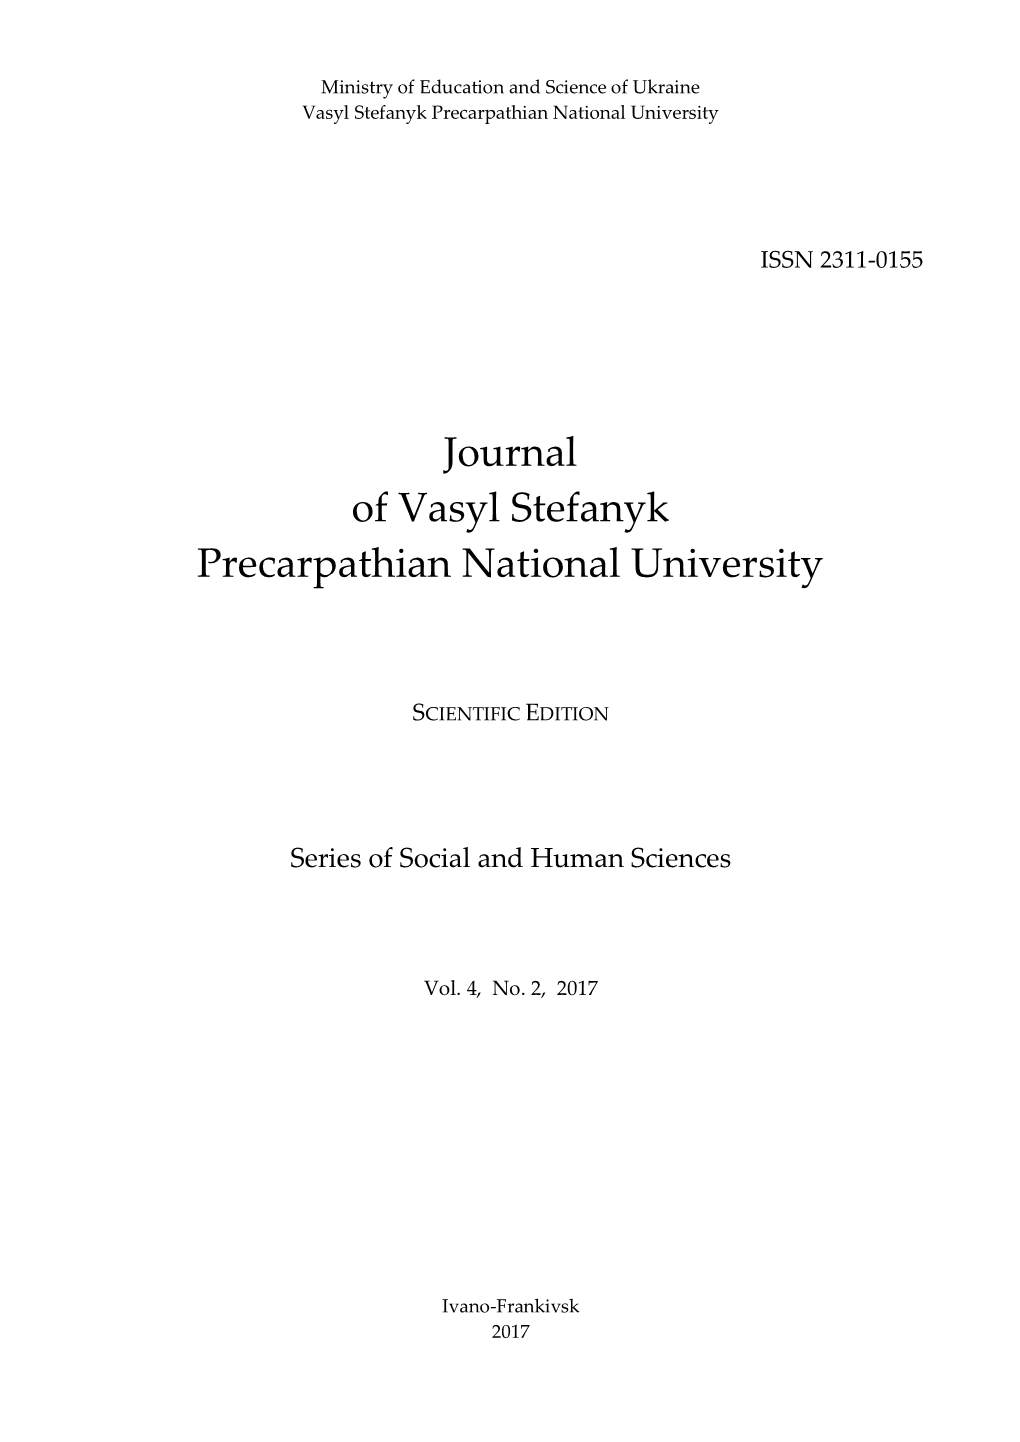 Journal of Vasyl Stefanyk Precarpathian National University